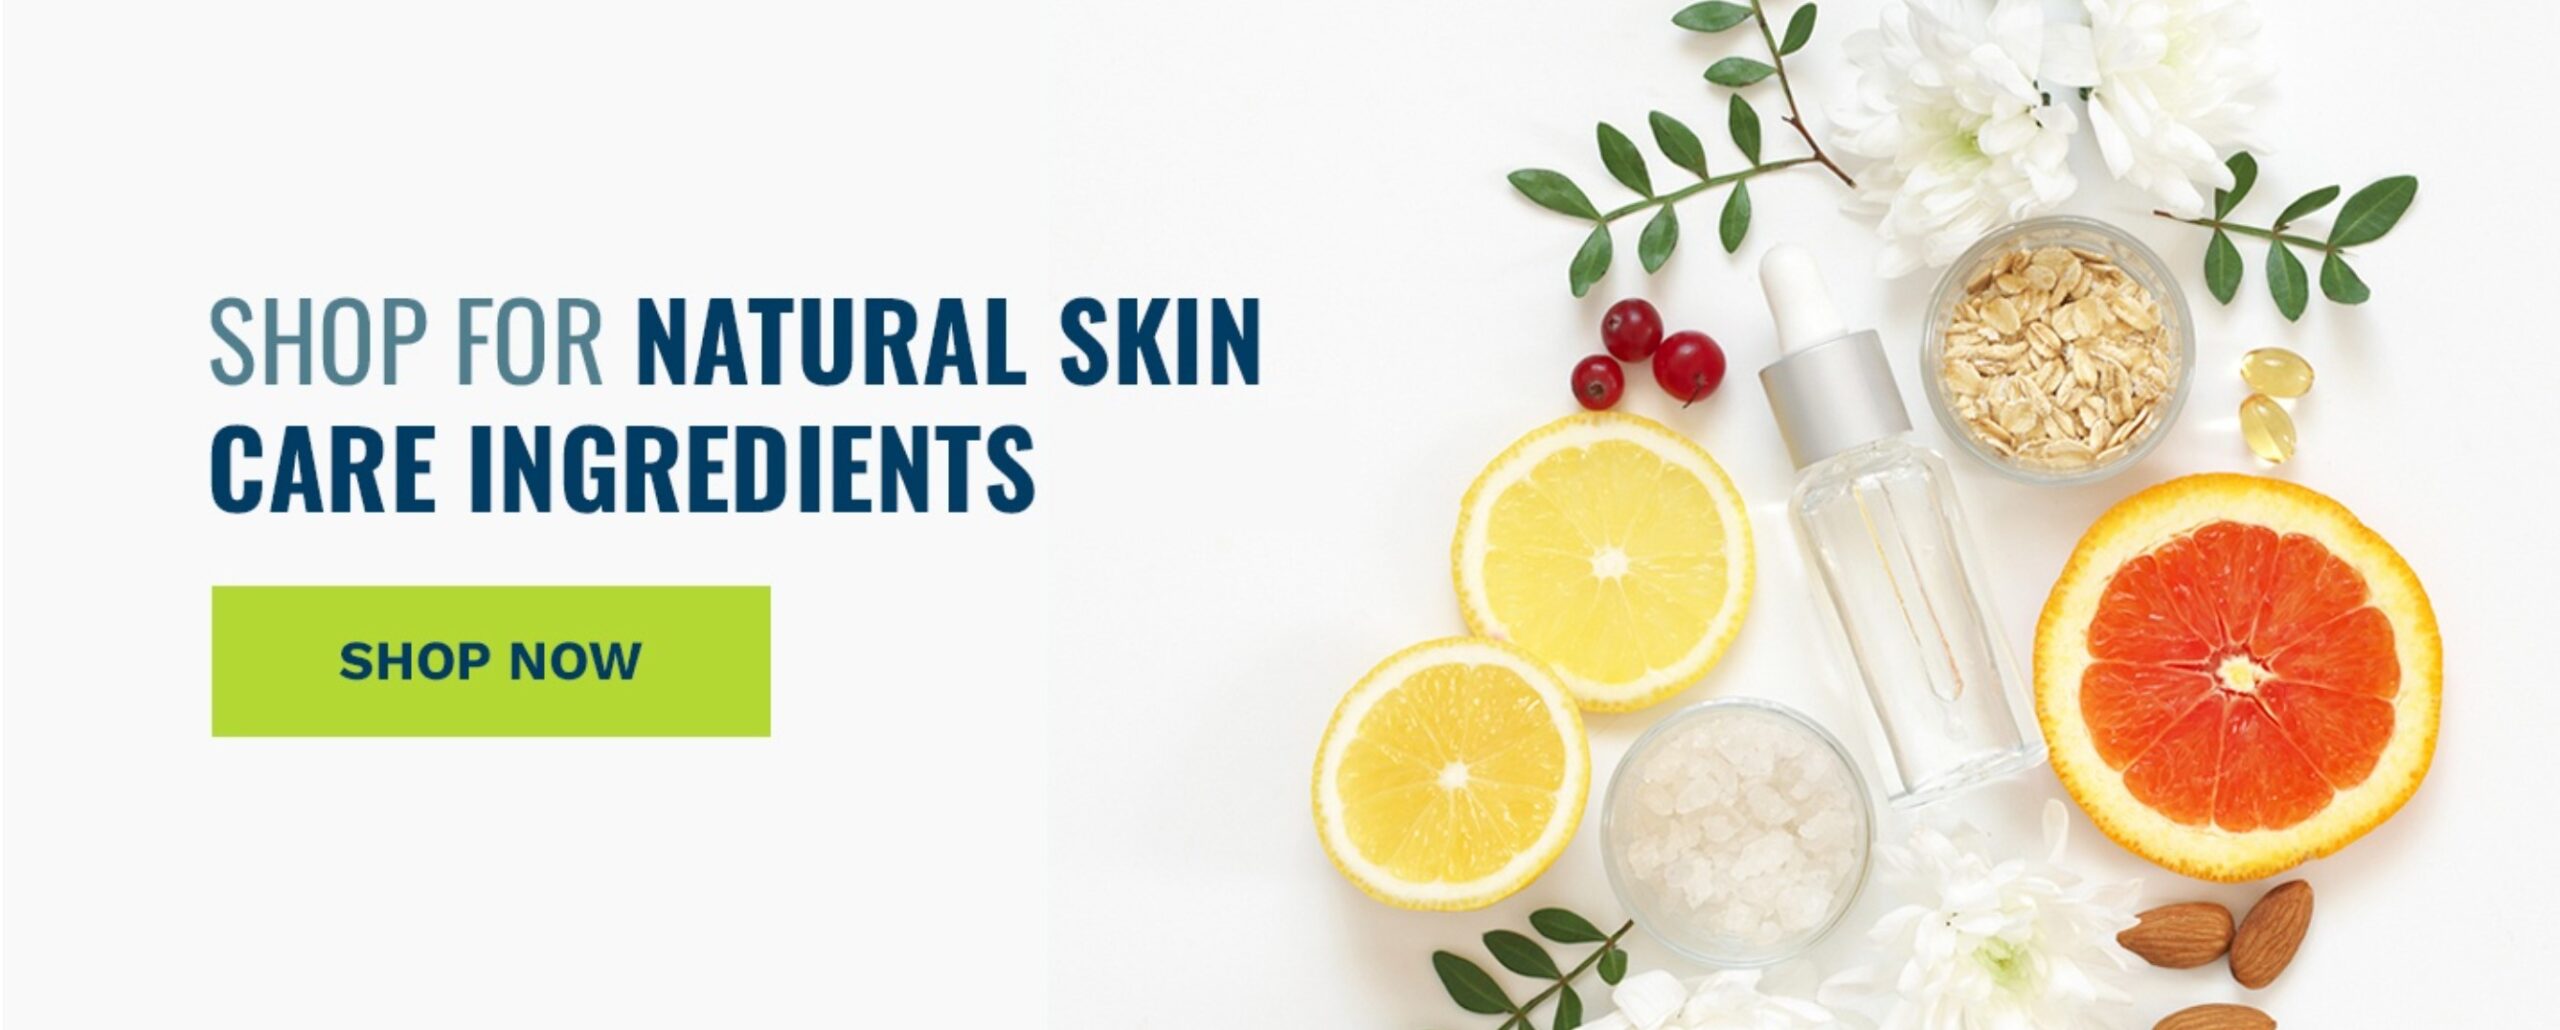 Shop for natural skin care ingredients